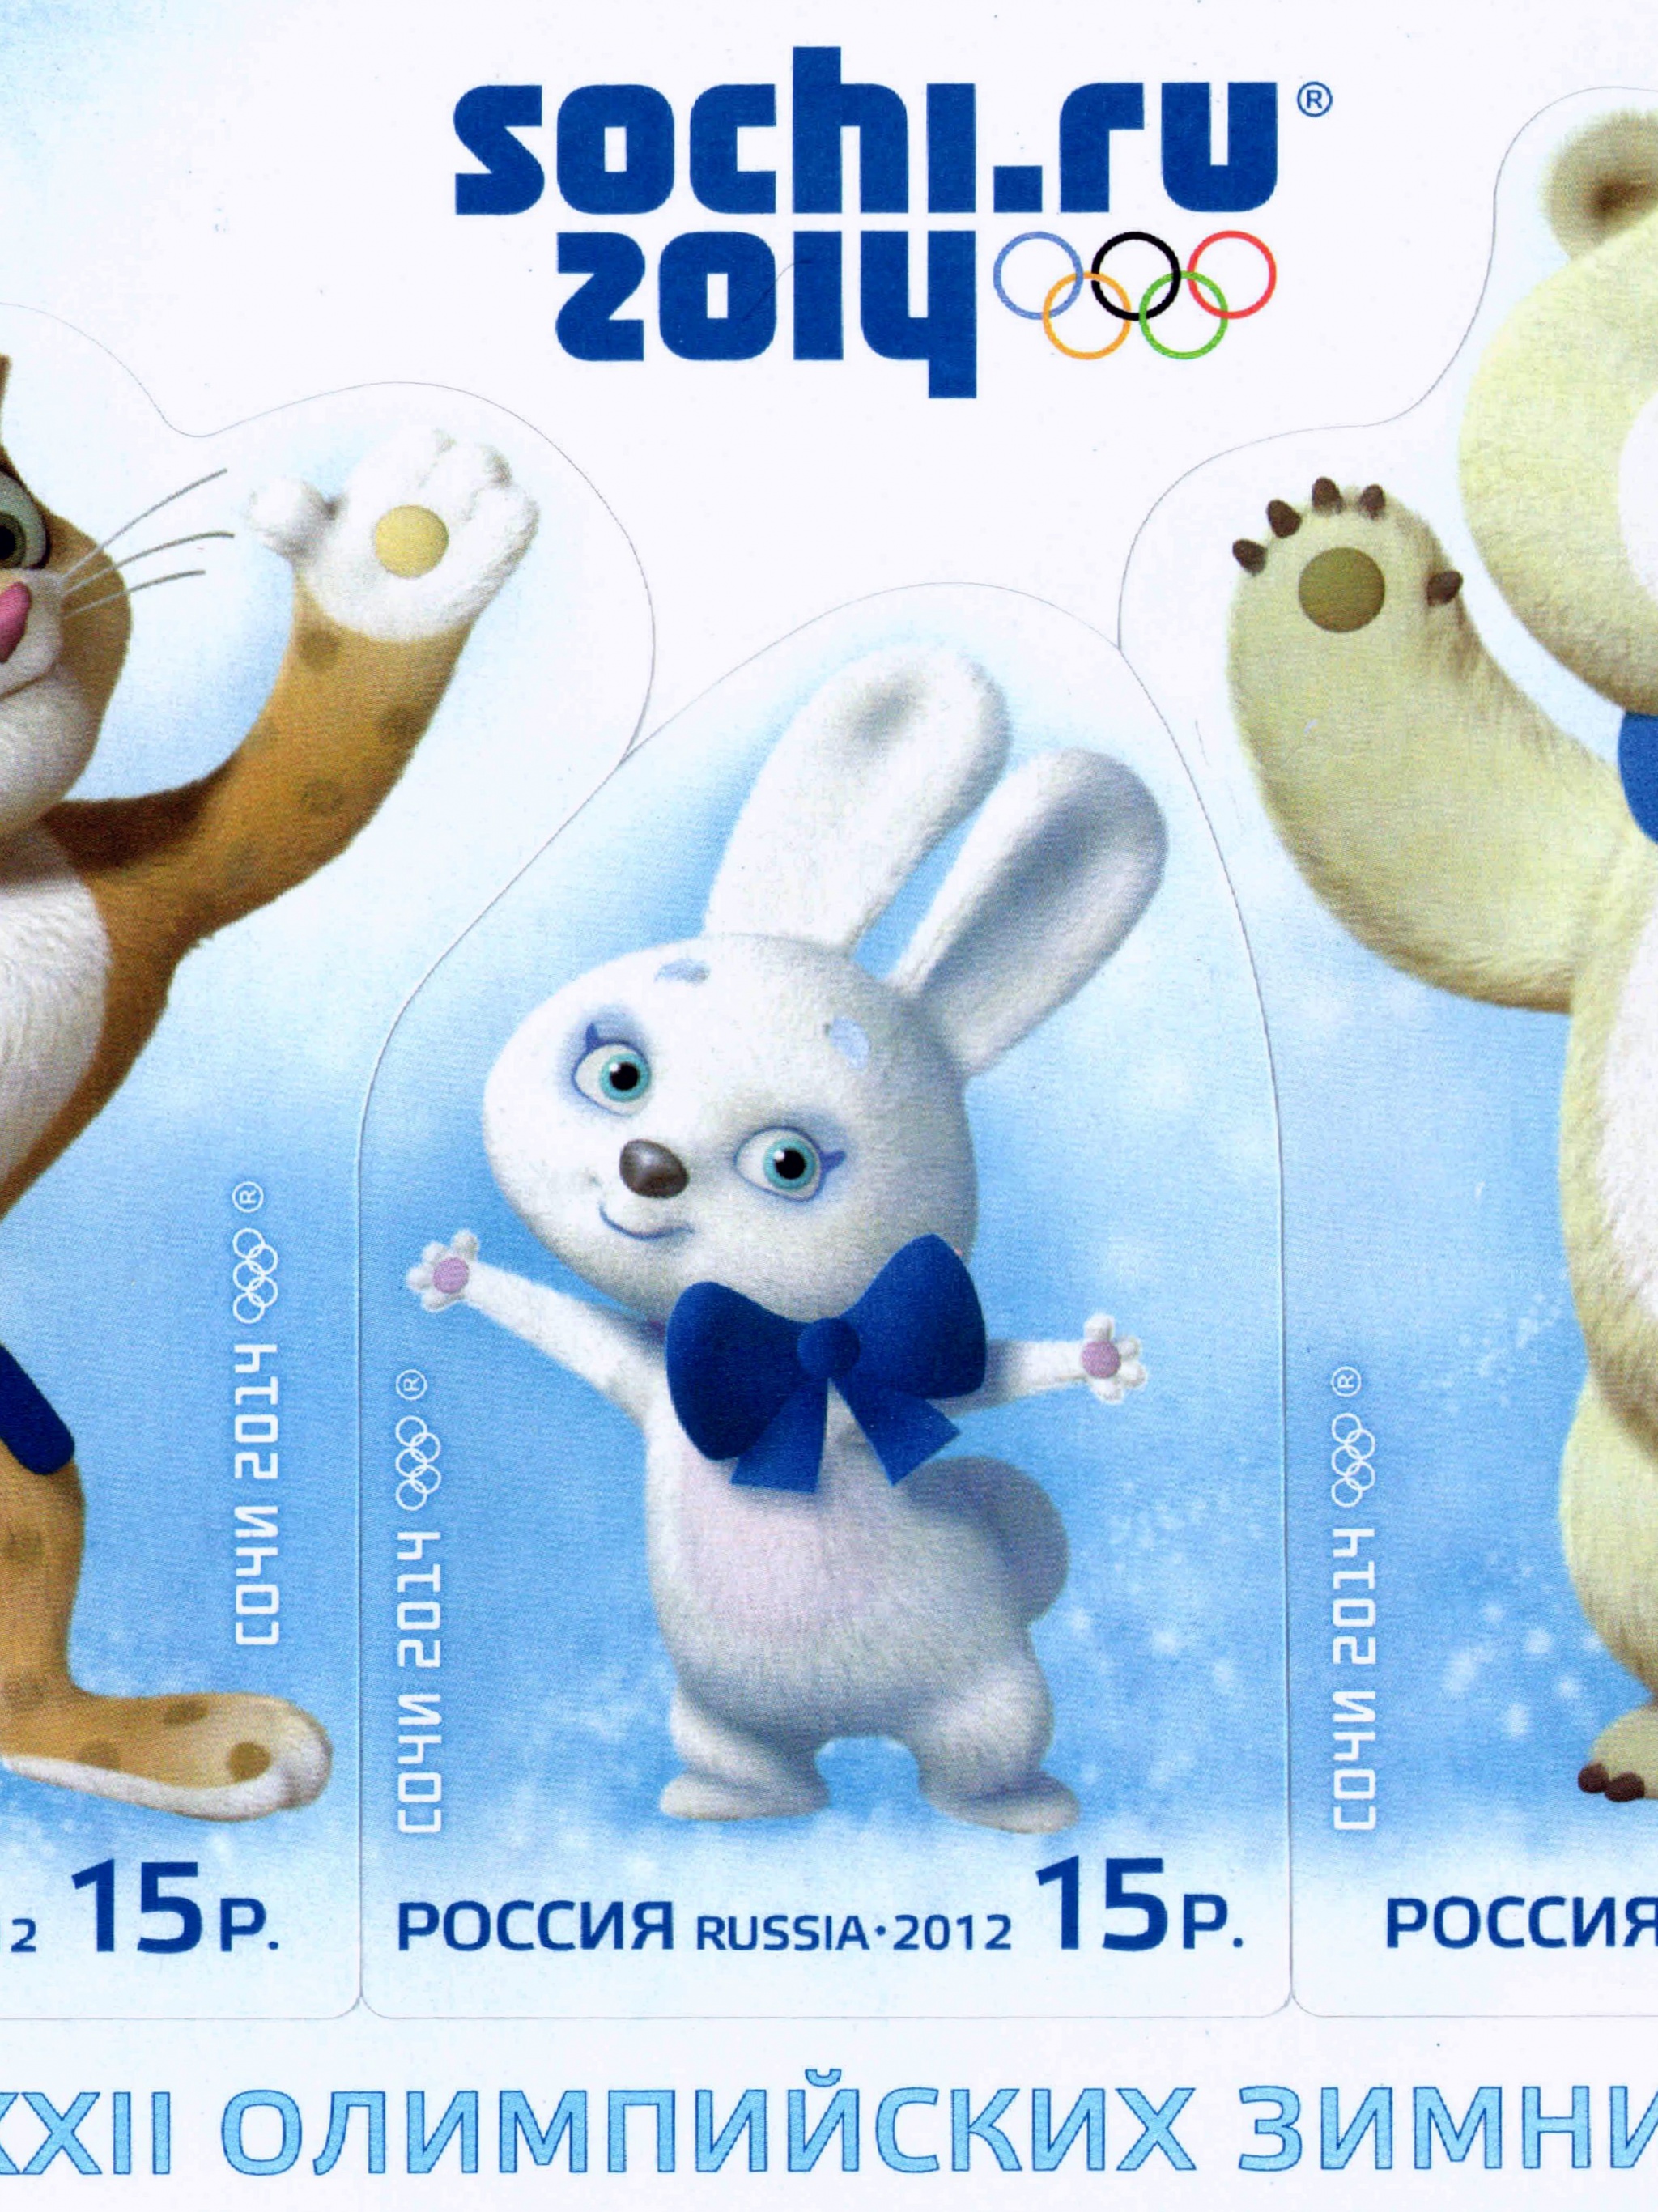 Mascots Winter Olympics Sochi 2014